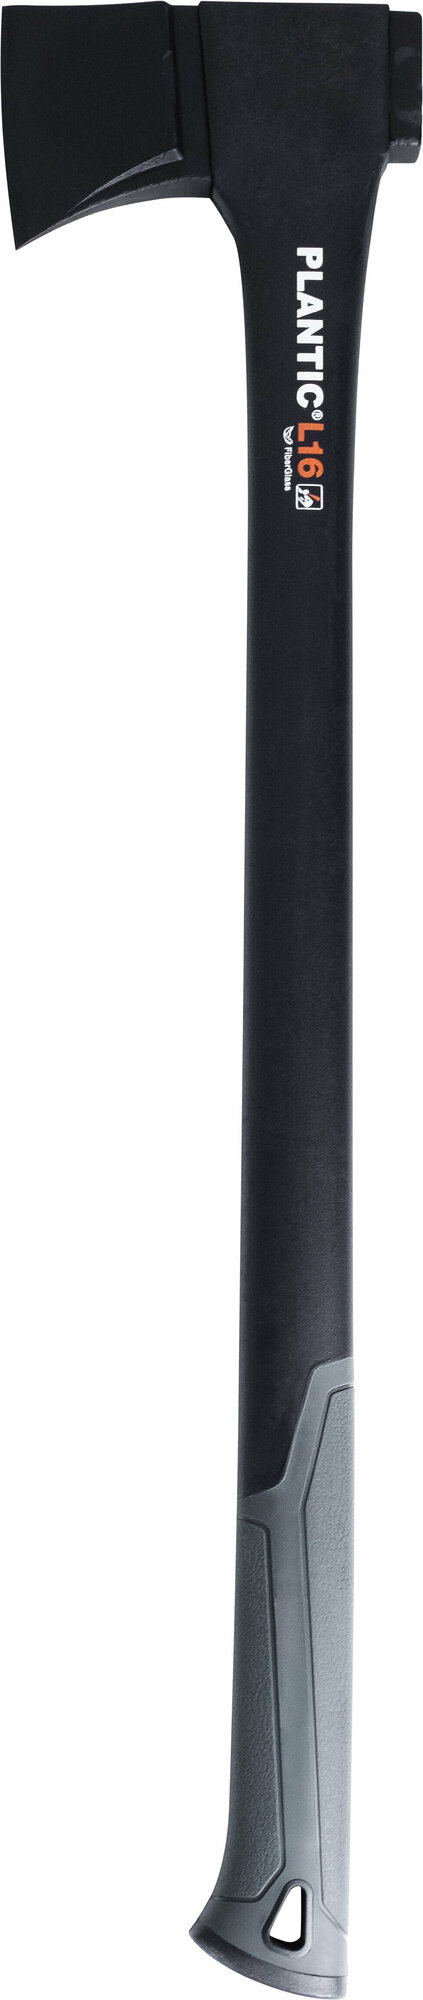 Топор-колун Plantic Light L16 двухкомпонентная ручка 785 мм 1300 кг - фото №10